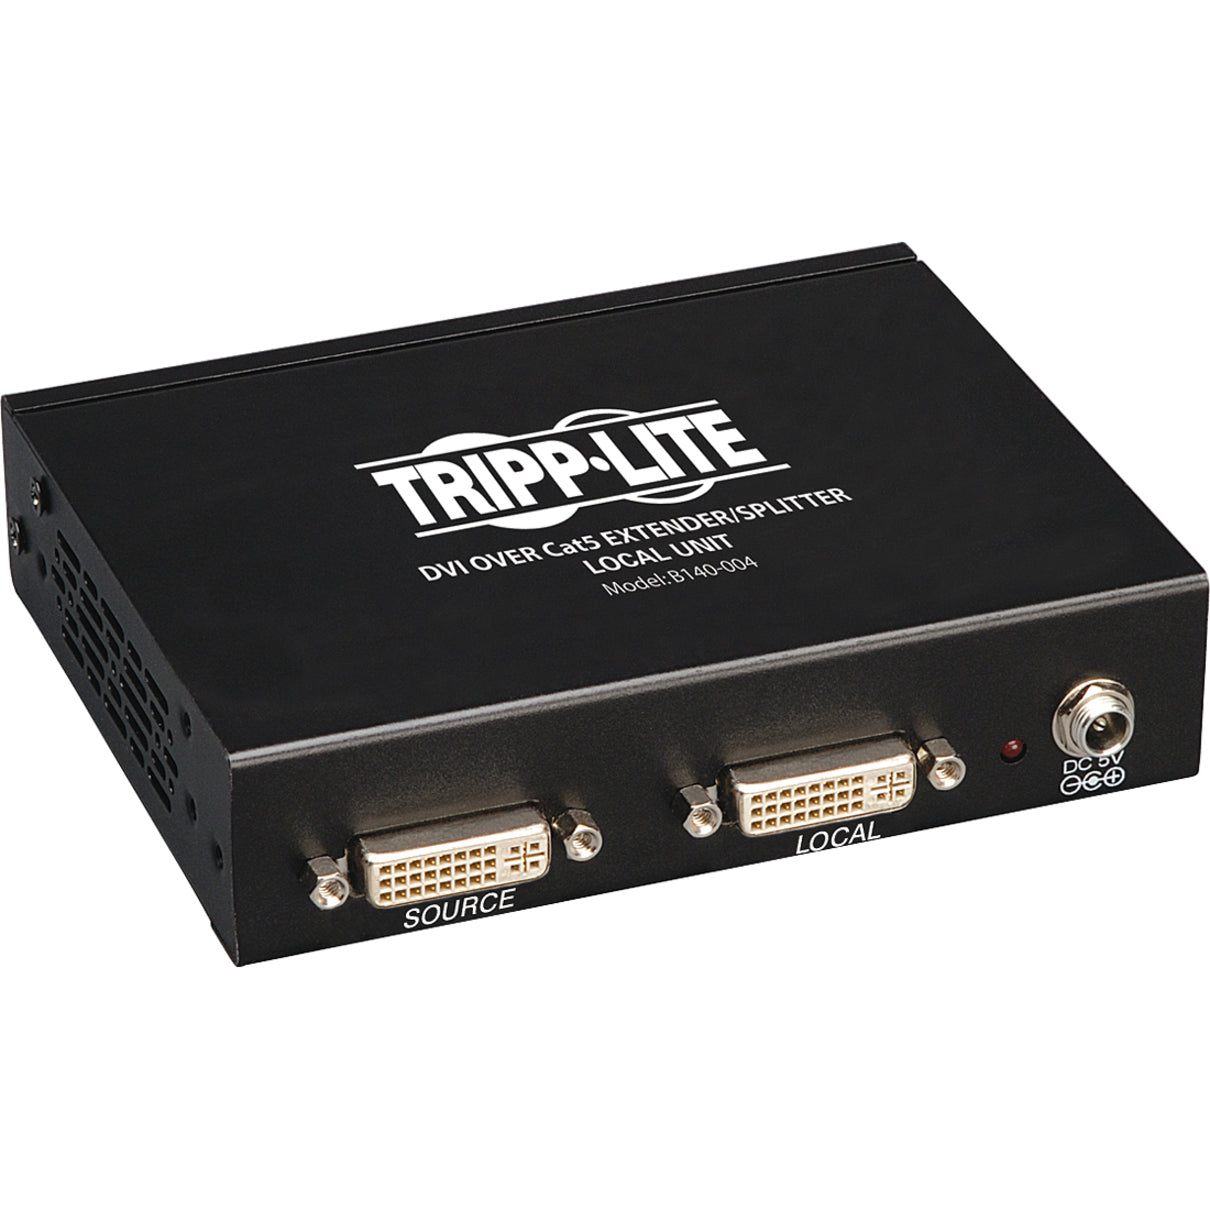 Tripp Lite B140-004 DVI over Cat5 Extender/Splitter, 4-Port Local Transmitter Unit, Full HD, 1920 x 1080, TAA Compliant